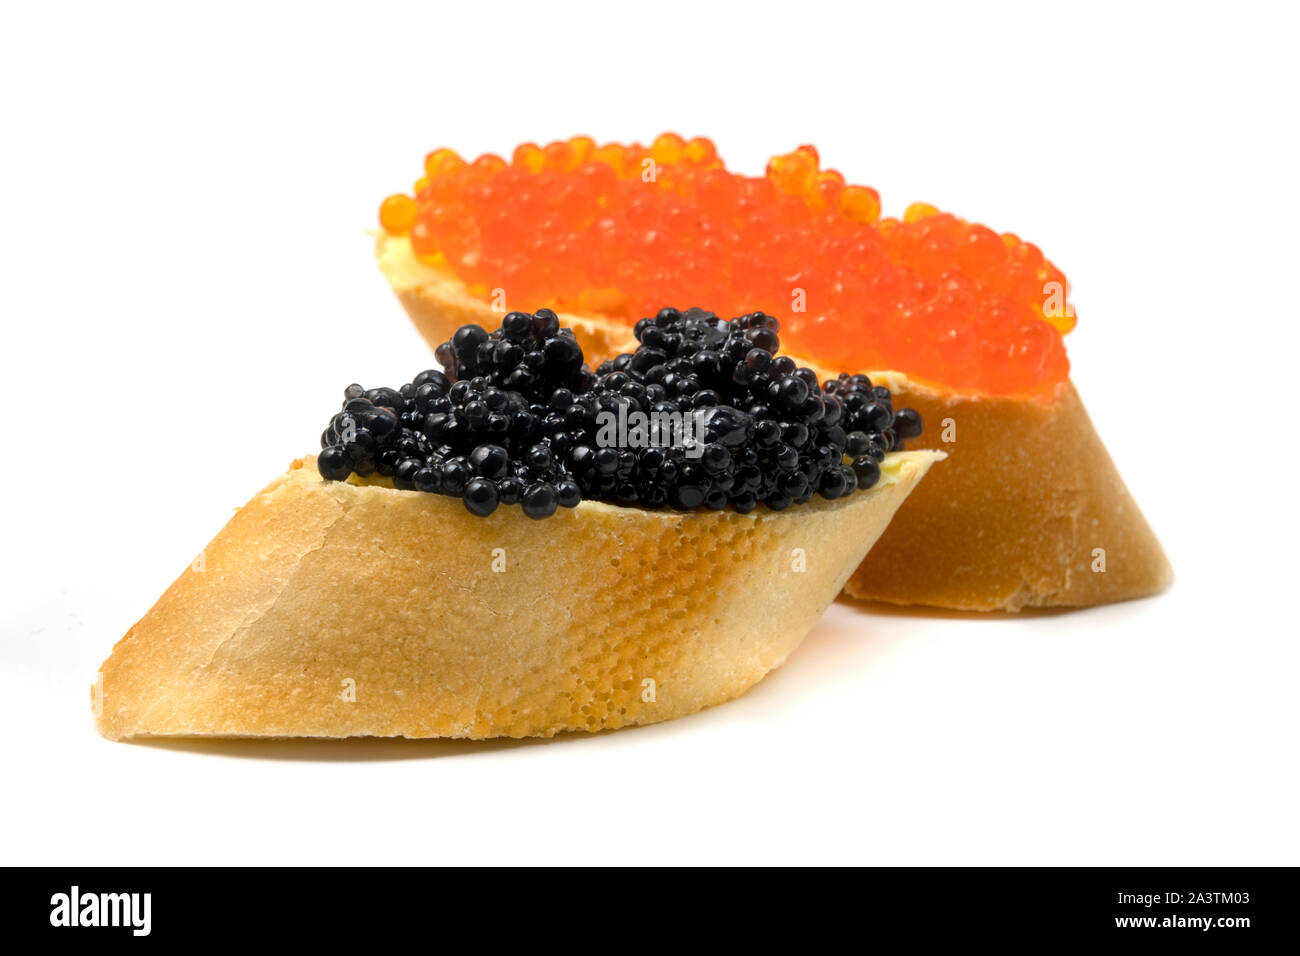 Salmon roe and sturgeon caviar on a white background Stock Photo